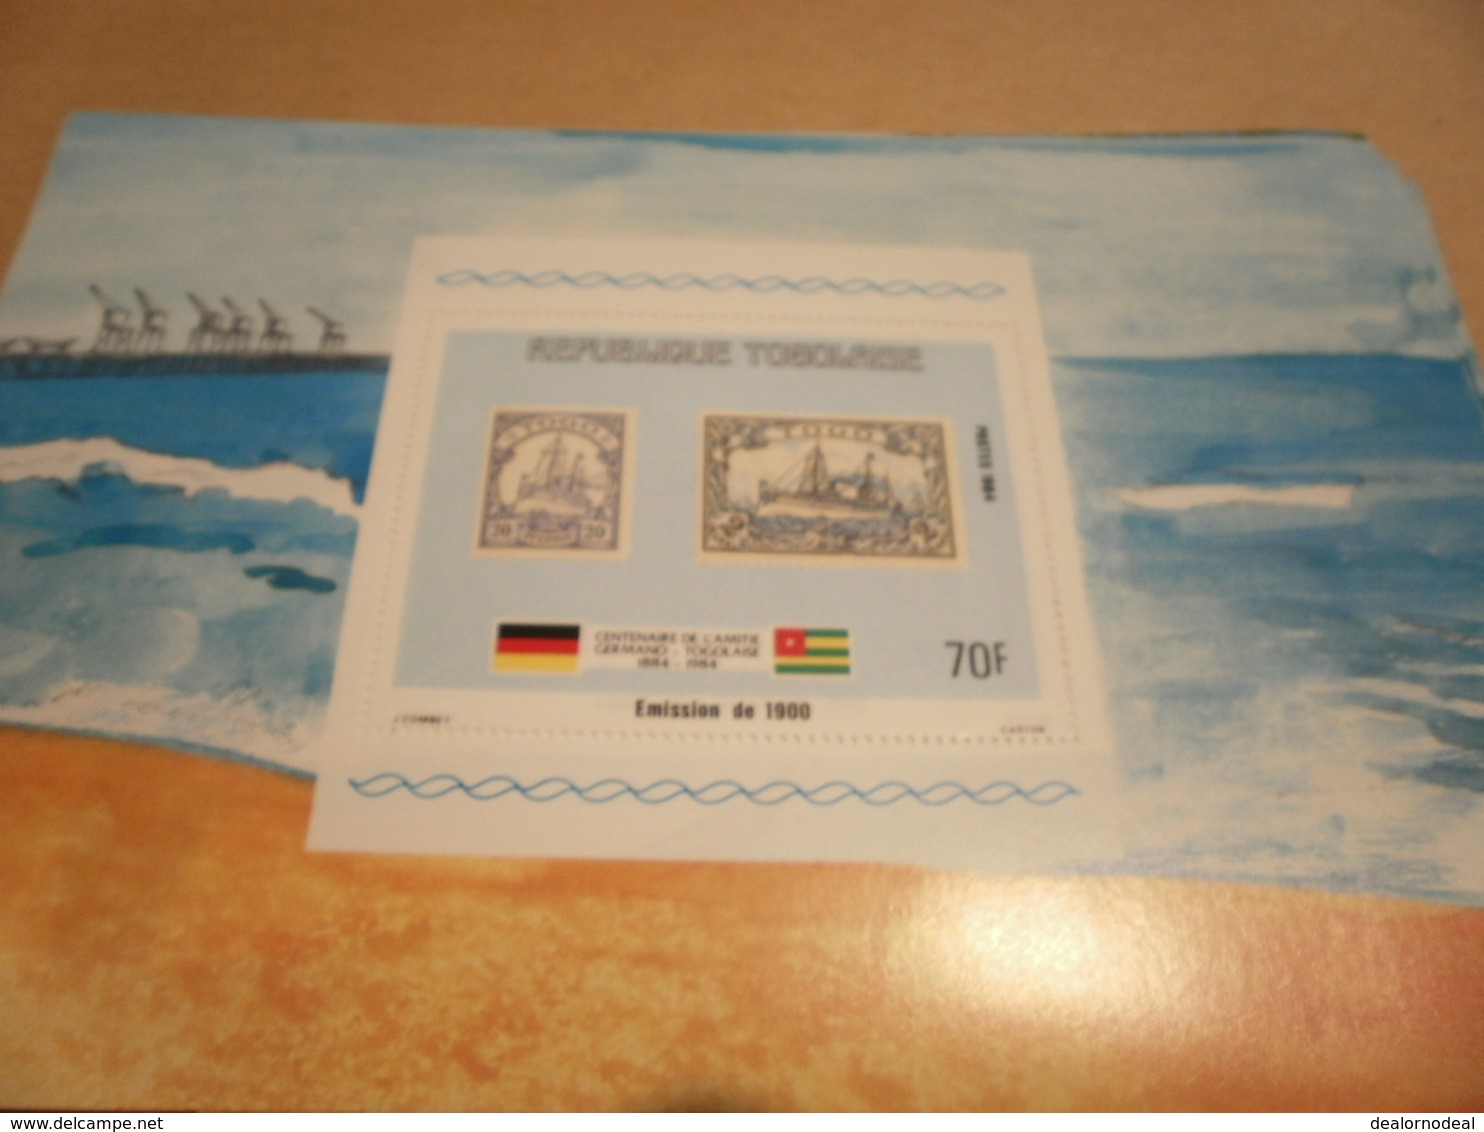 Miniature Sheet 1984 Togolaise Togo Emission 1900 1884 Centenary - Togo (1960-...)